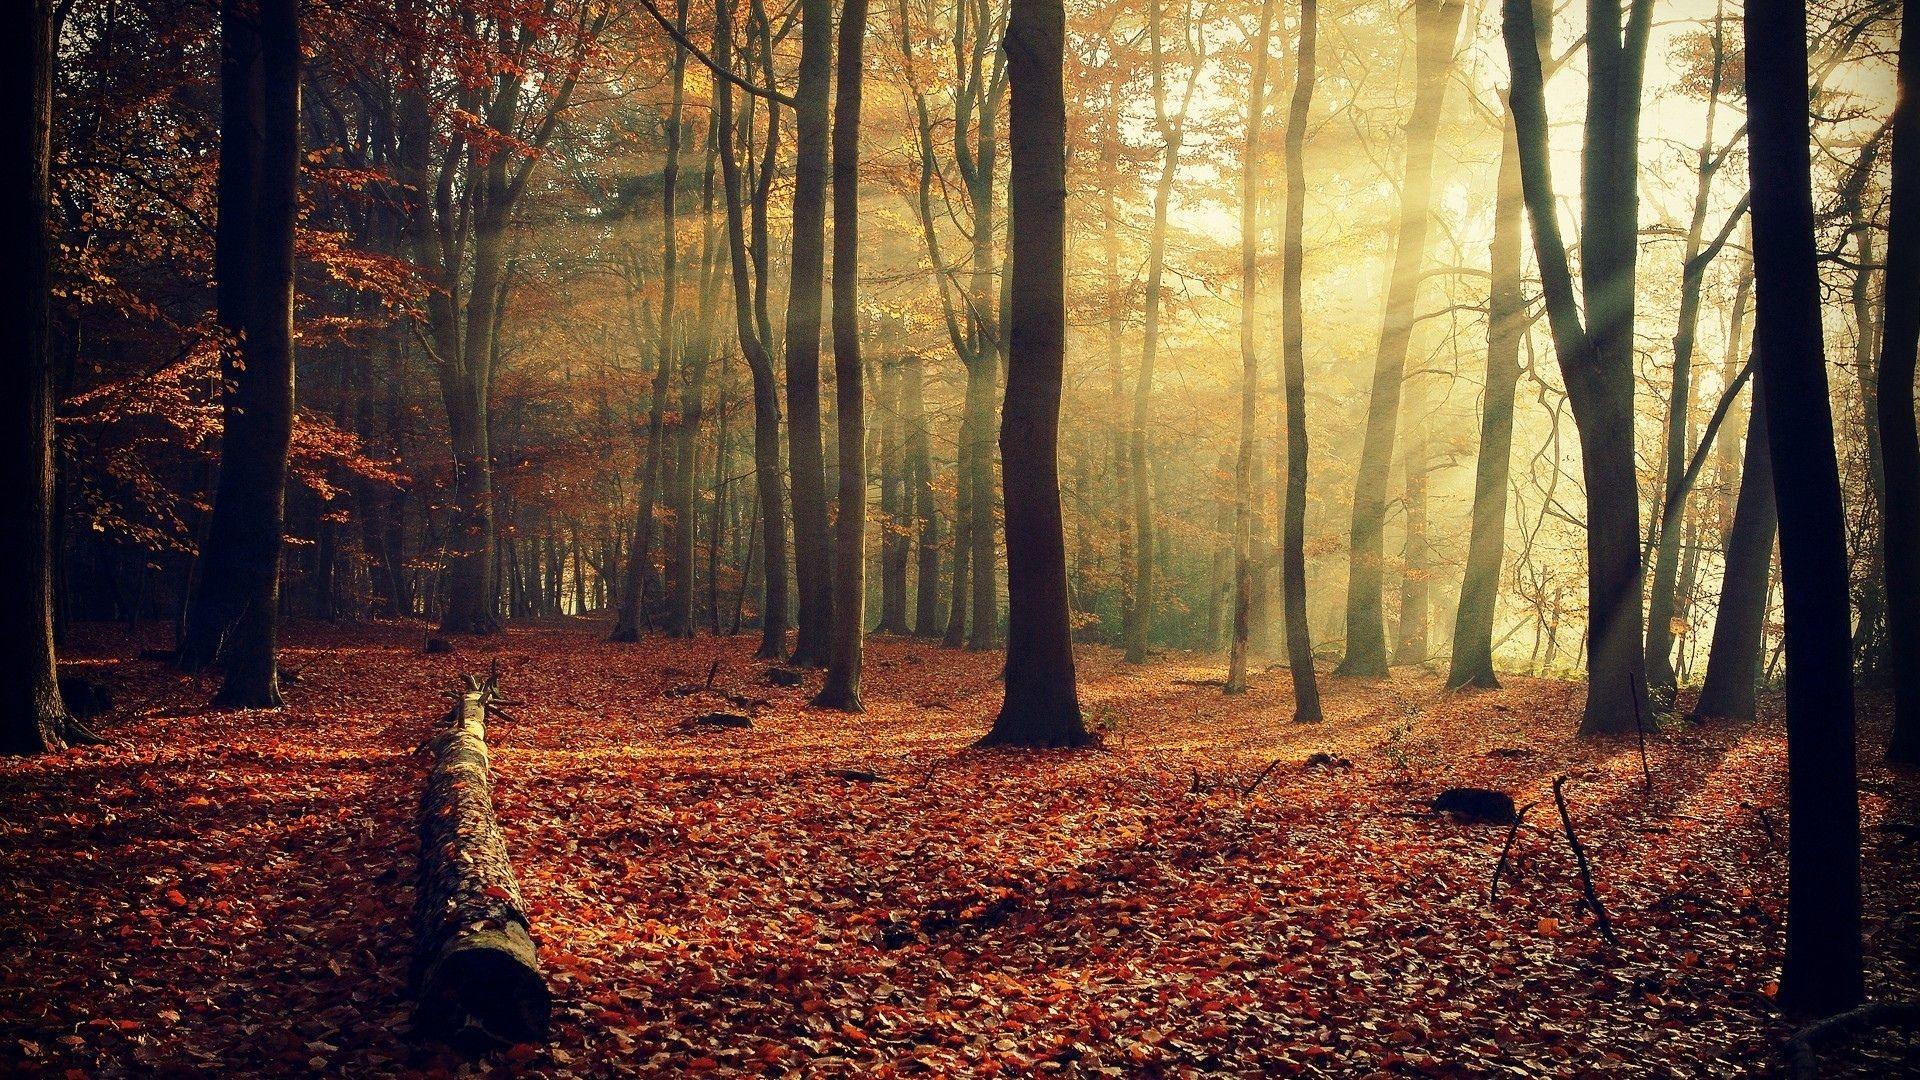 Wallpaper.wiki Autumn Forest Sunshine Full HD Background PIC